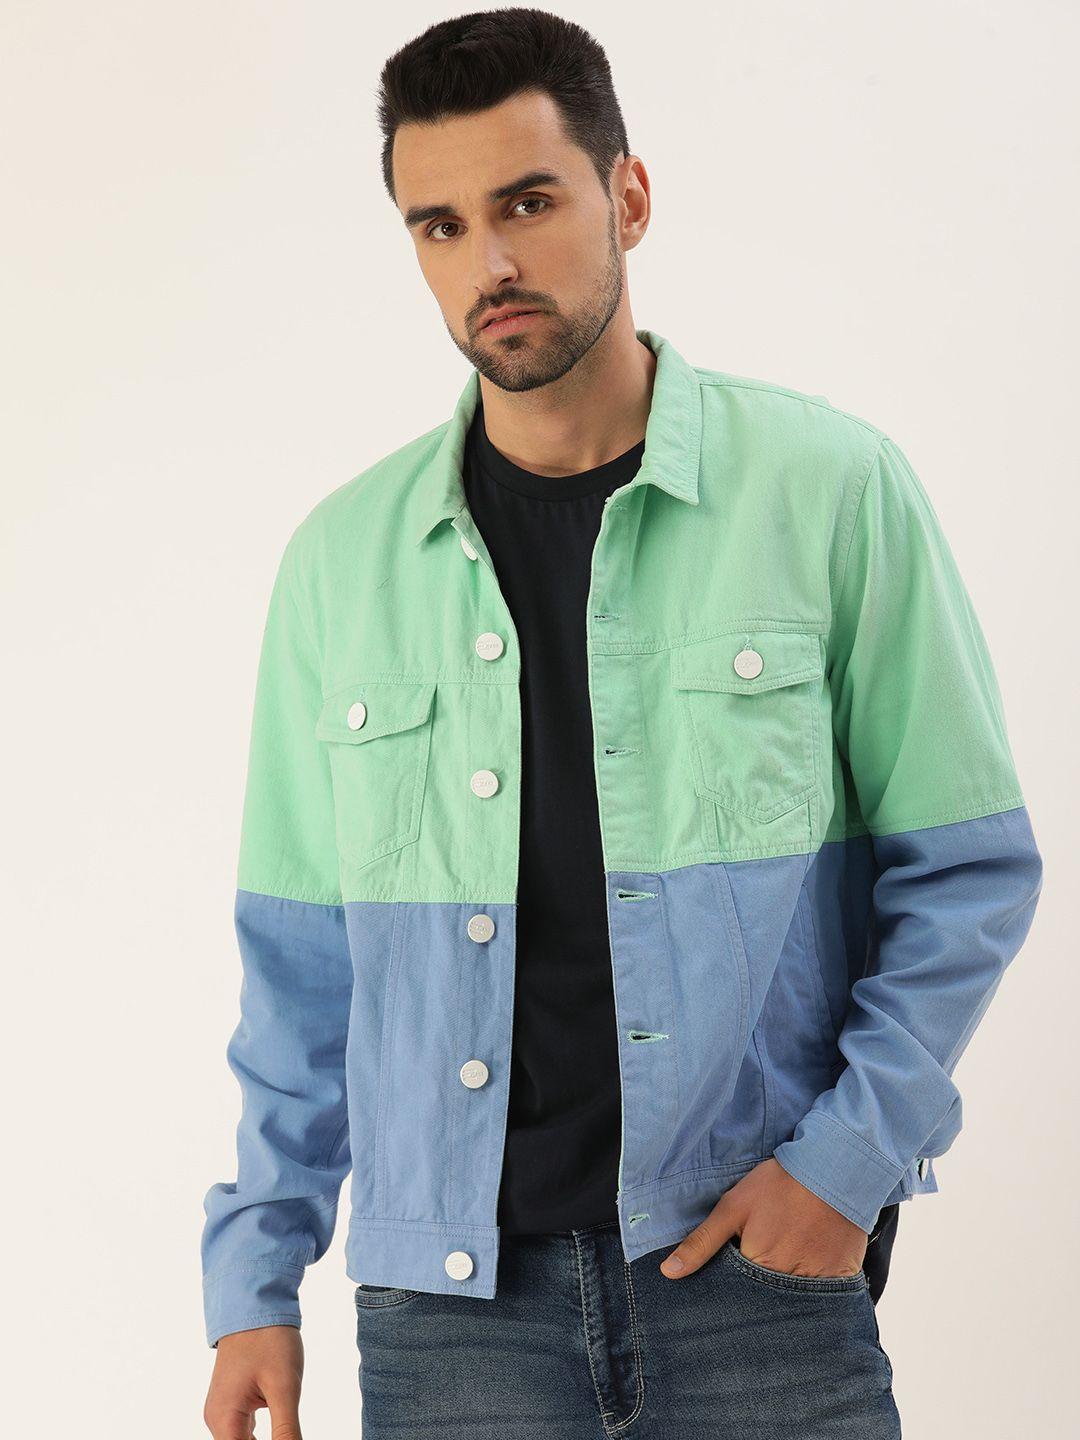 bene kleed men green & blue colourblocked antimicrobial denim cotton jacket